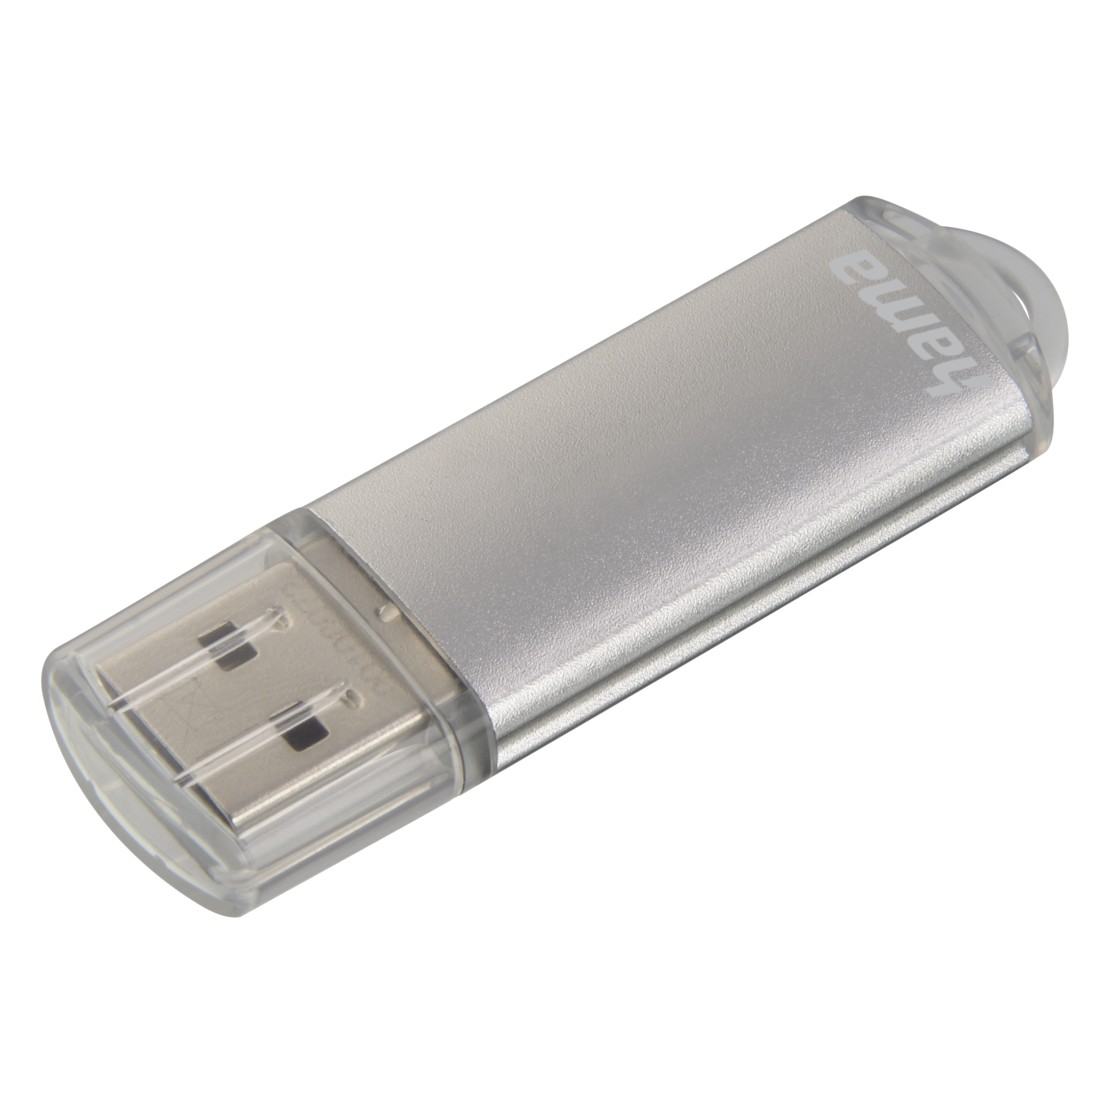 00108072 Hama USB-Stick "Laeta", USB 2.0, 128 GB, 10MB/s, Silber | hama- suisse.ch